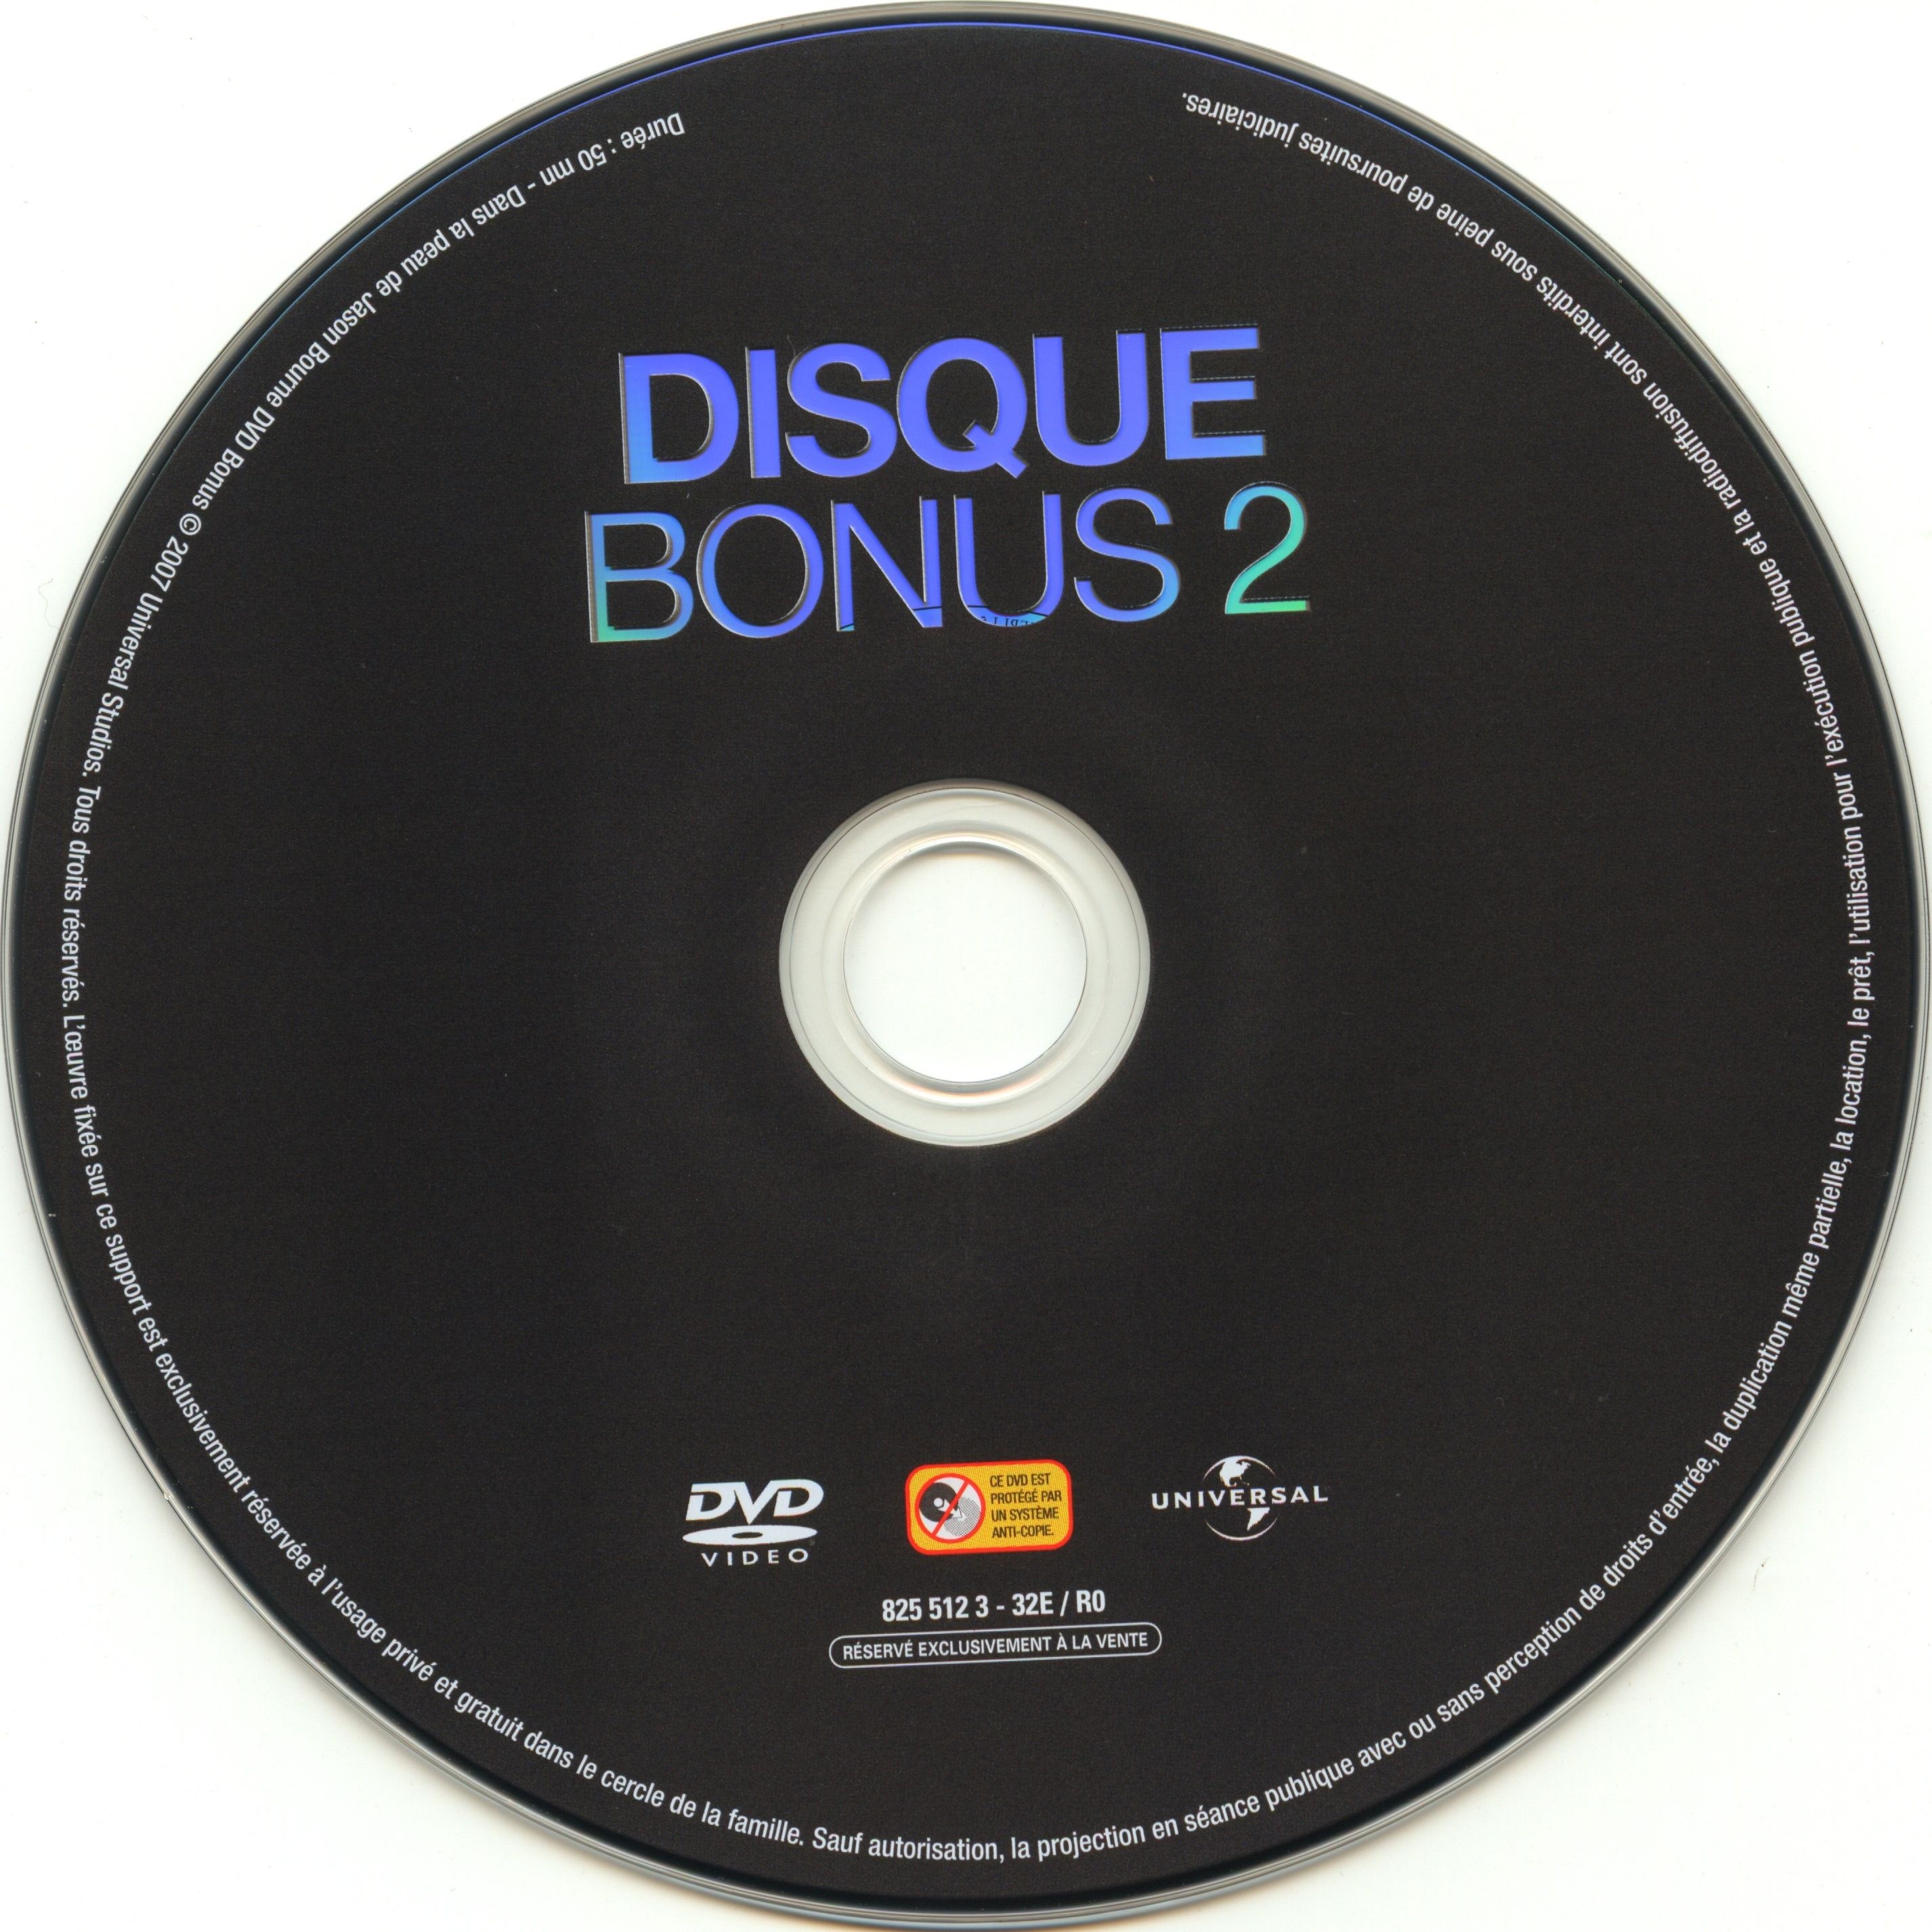 Jason Bourne Trilogie DVD BONUS 2